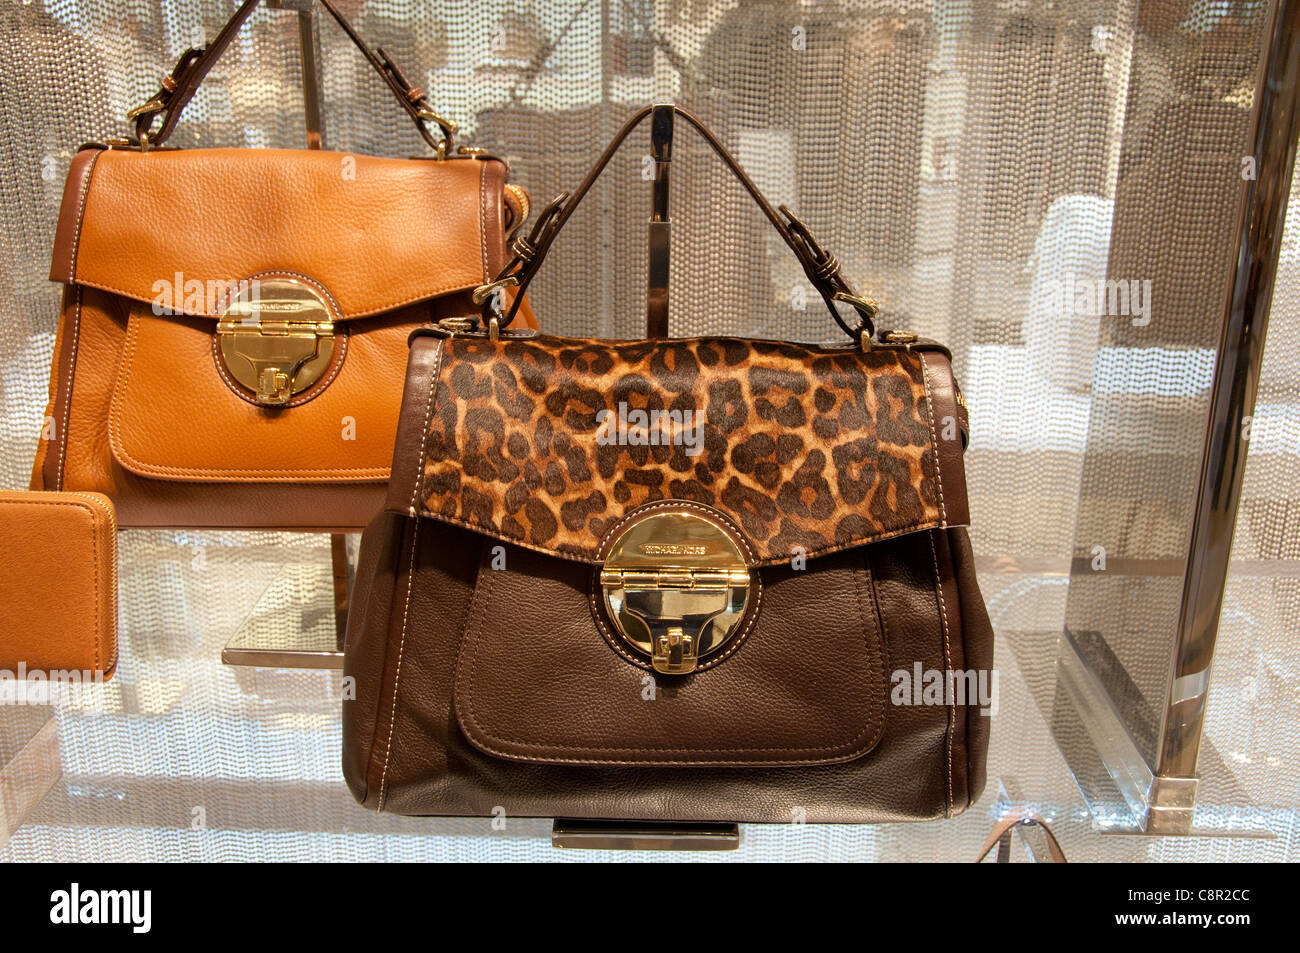 Bag Bags Michael Kors New York shop display window United states of America Stock -